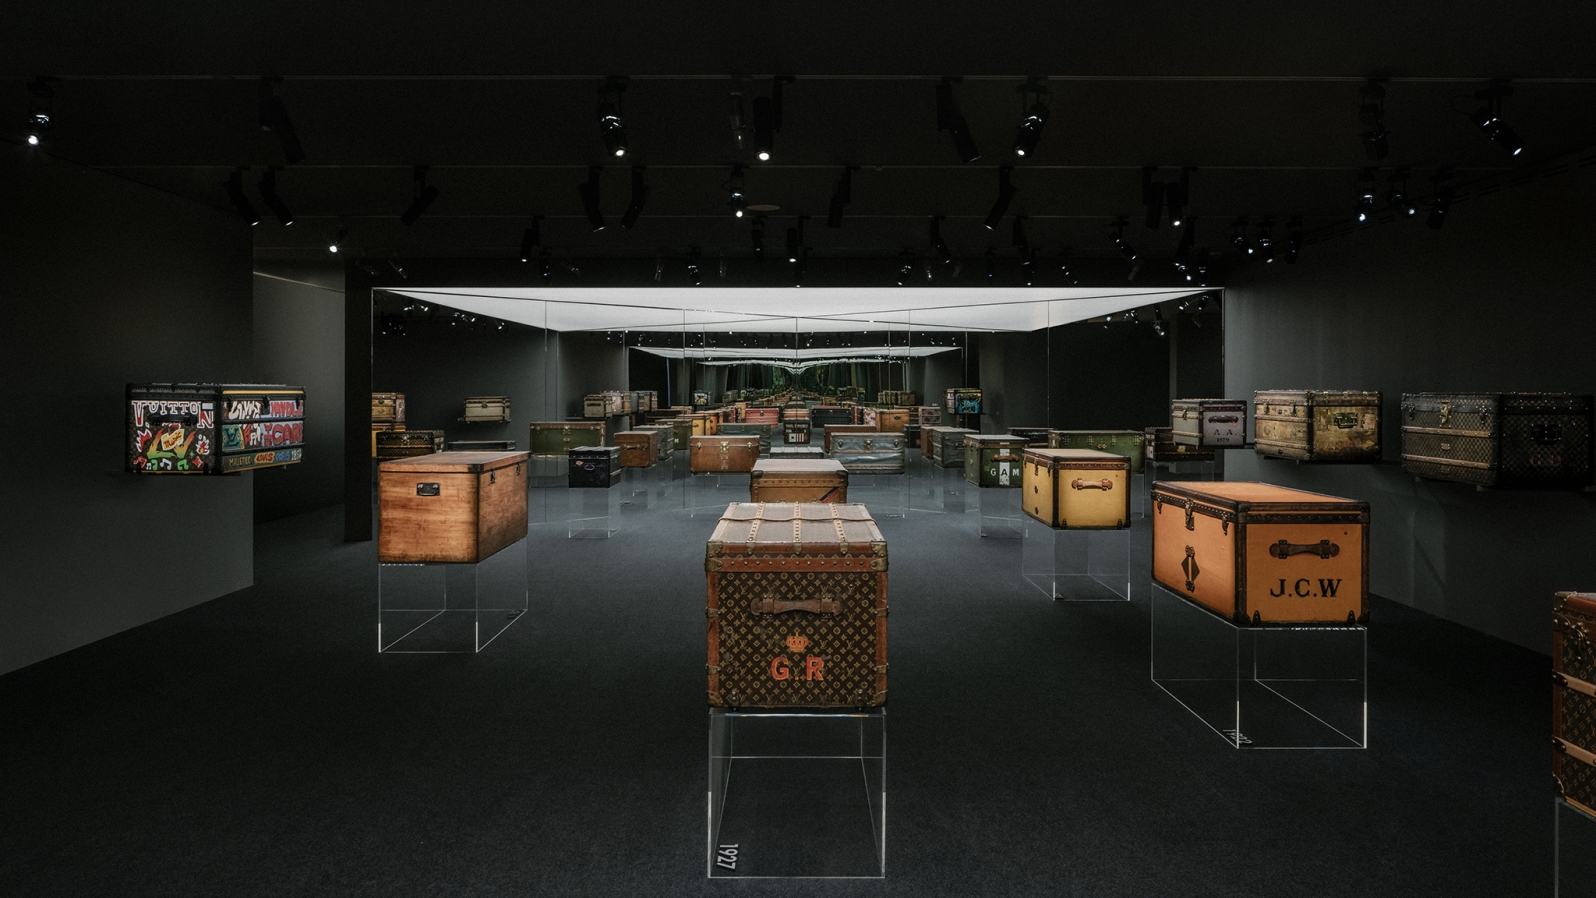 The Malle Courrier exhibition by Louis Vuitton in Asnières, France